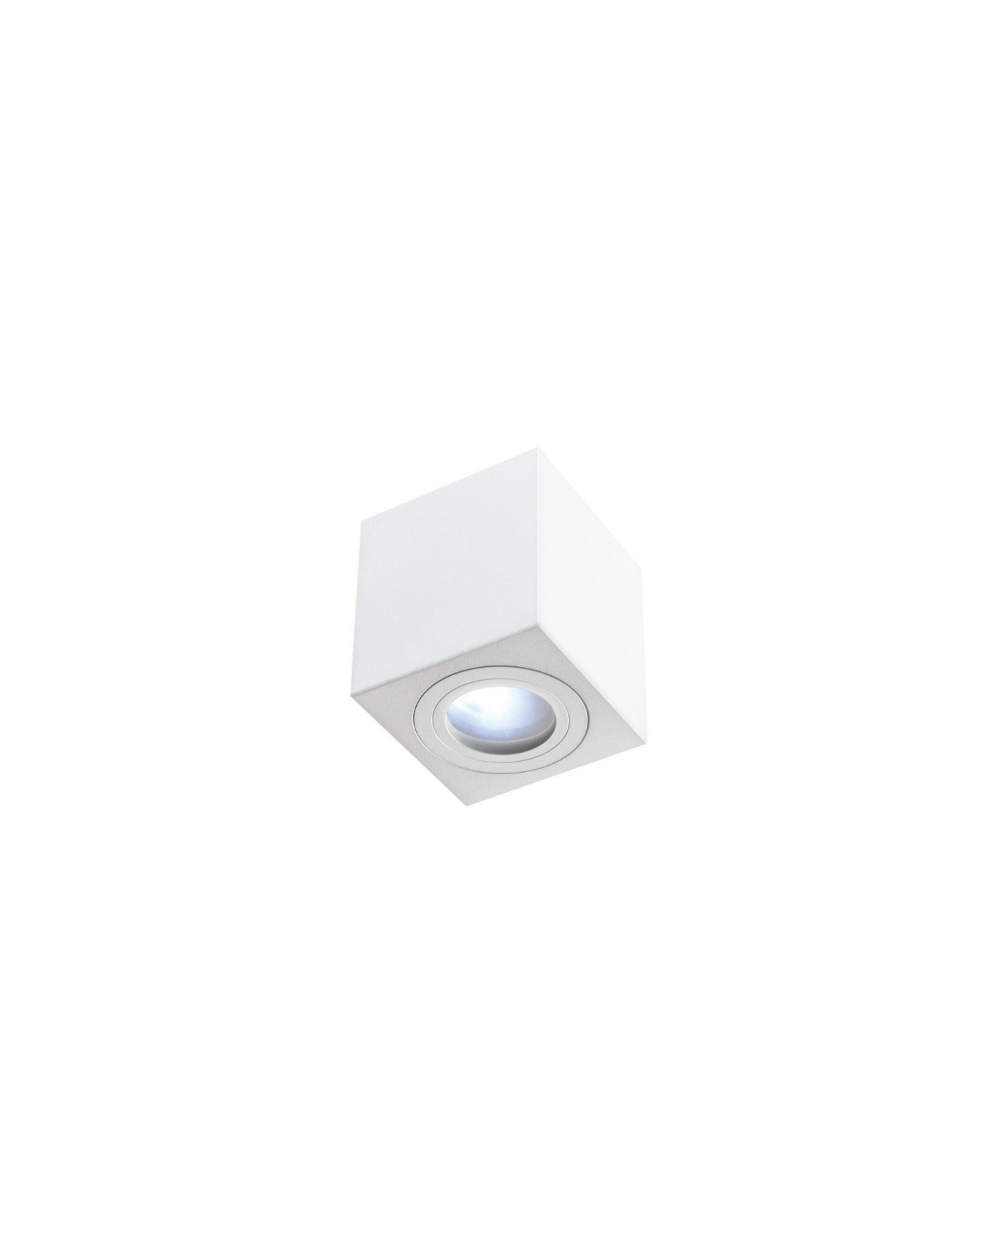 Lampa sufitowa / natynkowa Lago Bianco IP44 - Orlicki Design biała, kwadratowa do łazienki i kuchni